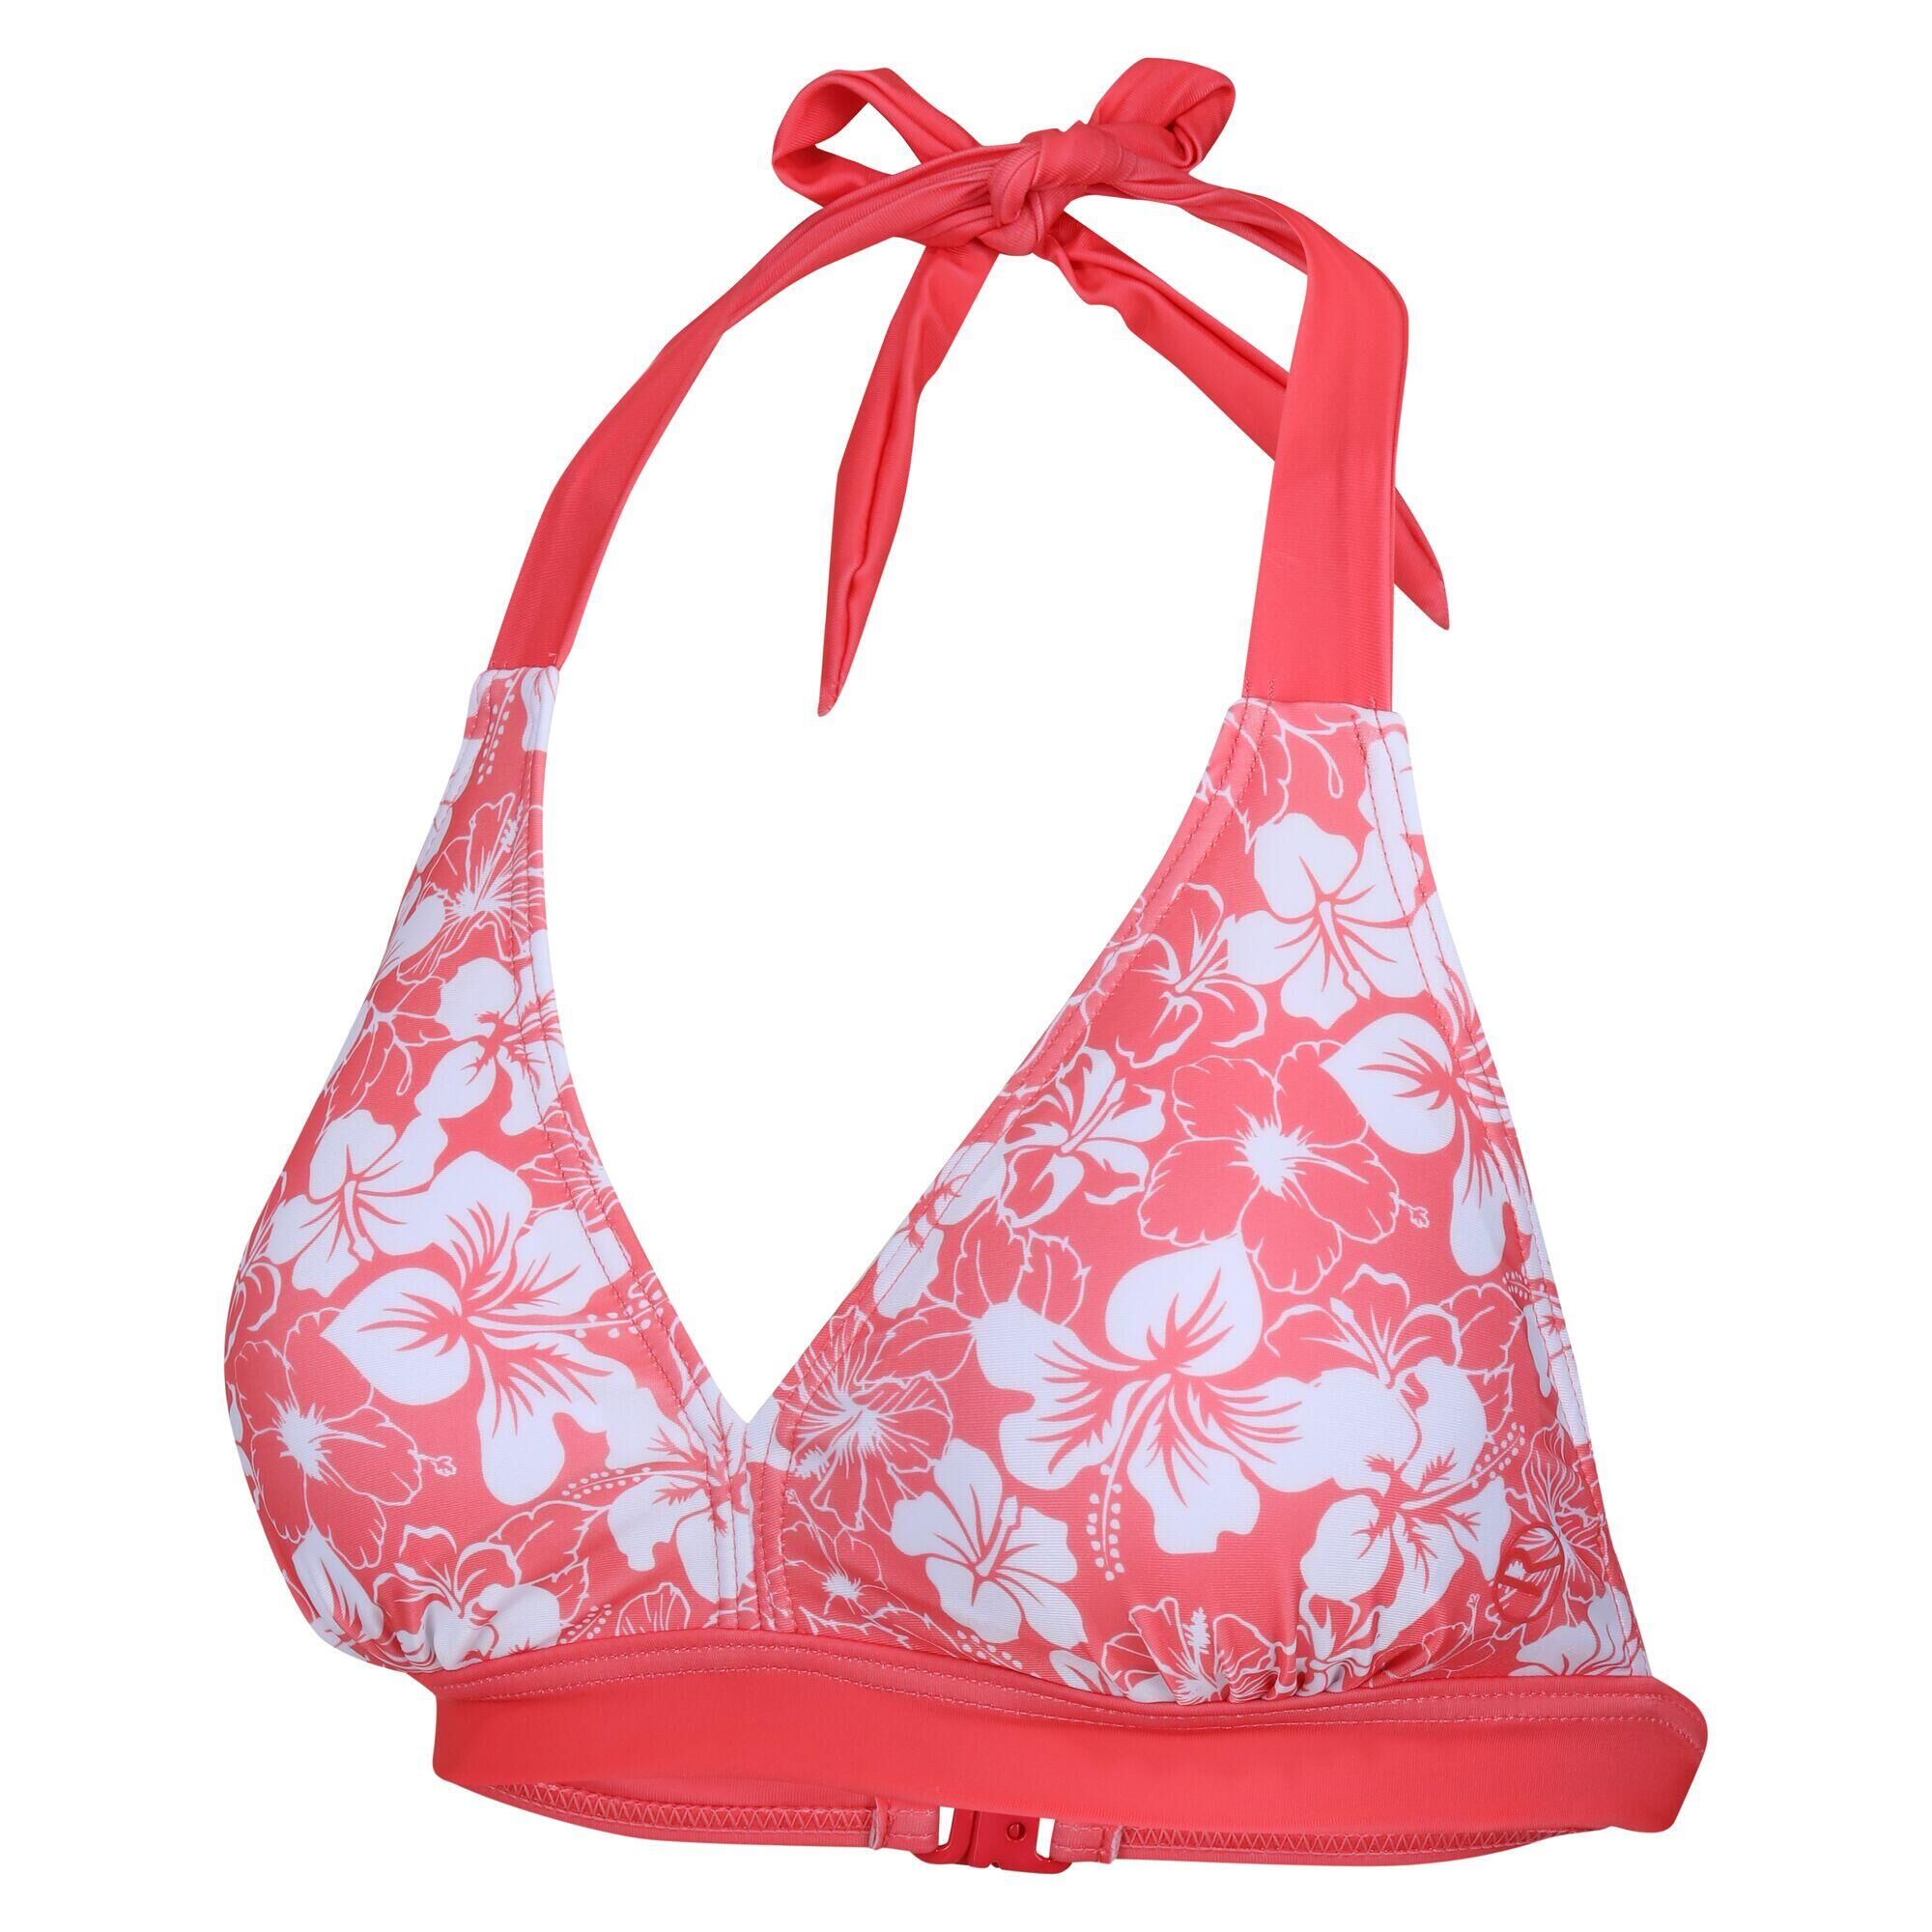 REGATTA Women's Flavia String Bikini Top